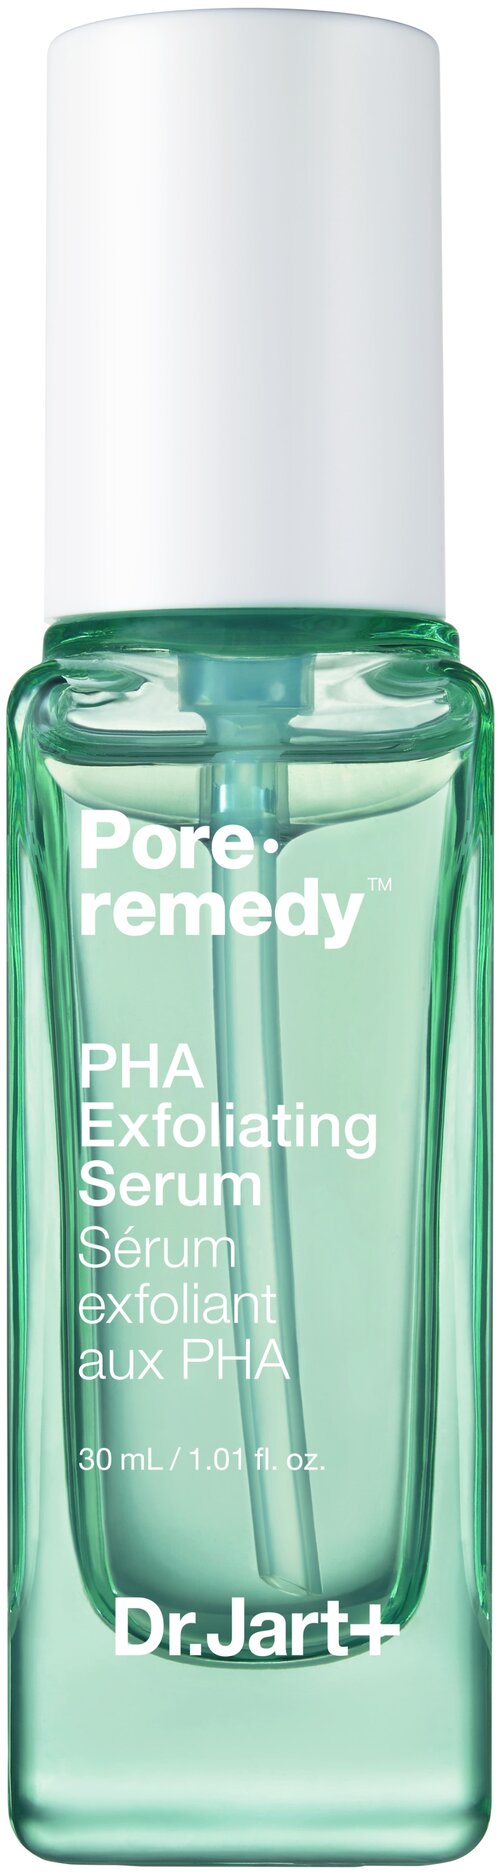 Dr. Jart+ Pore Remedy PHA Exfoliating Serum Обновляющая сыворотка для лица 30 мл.